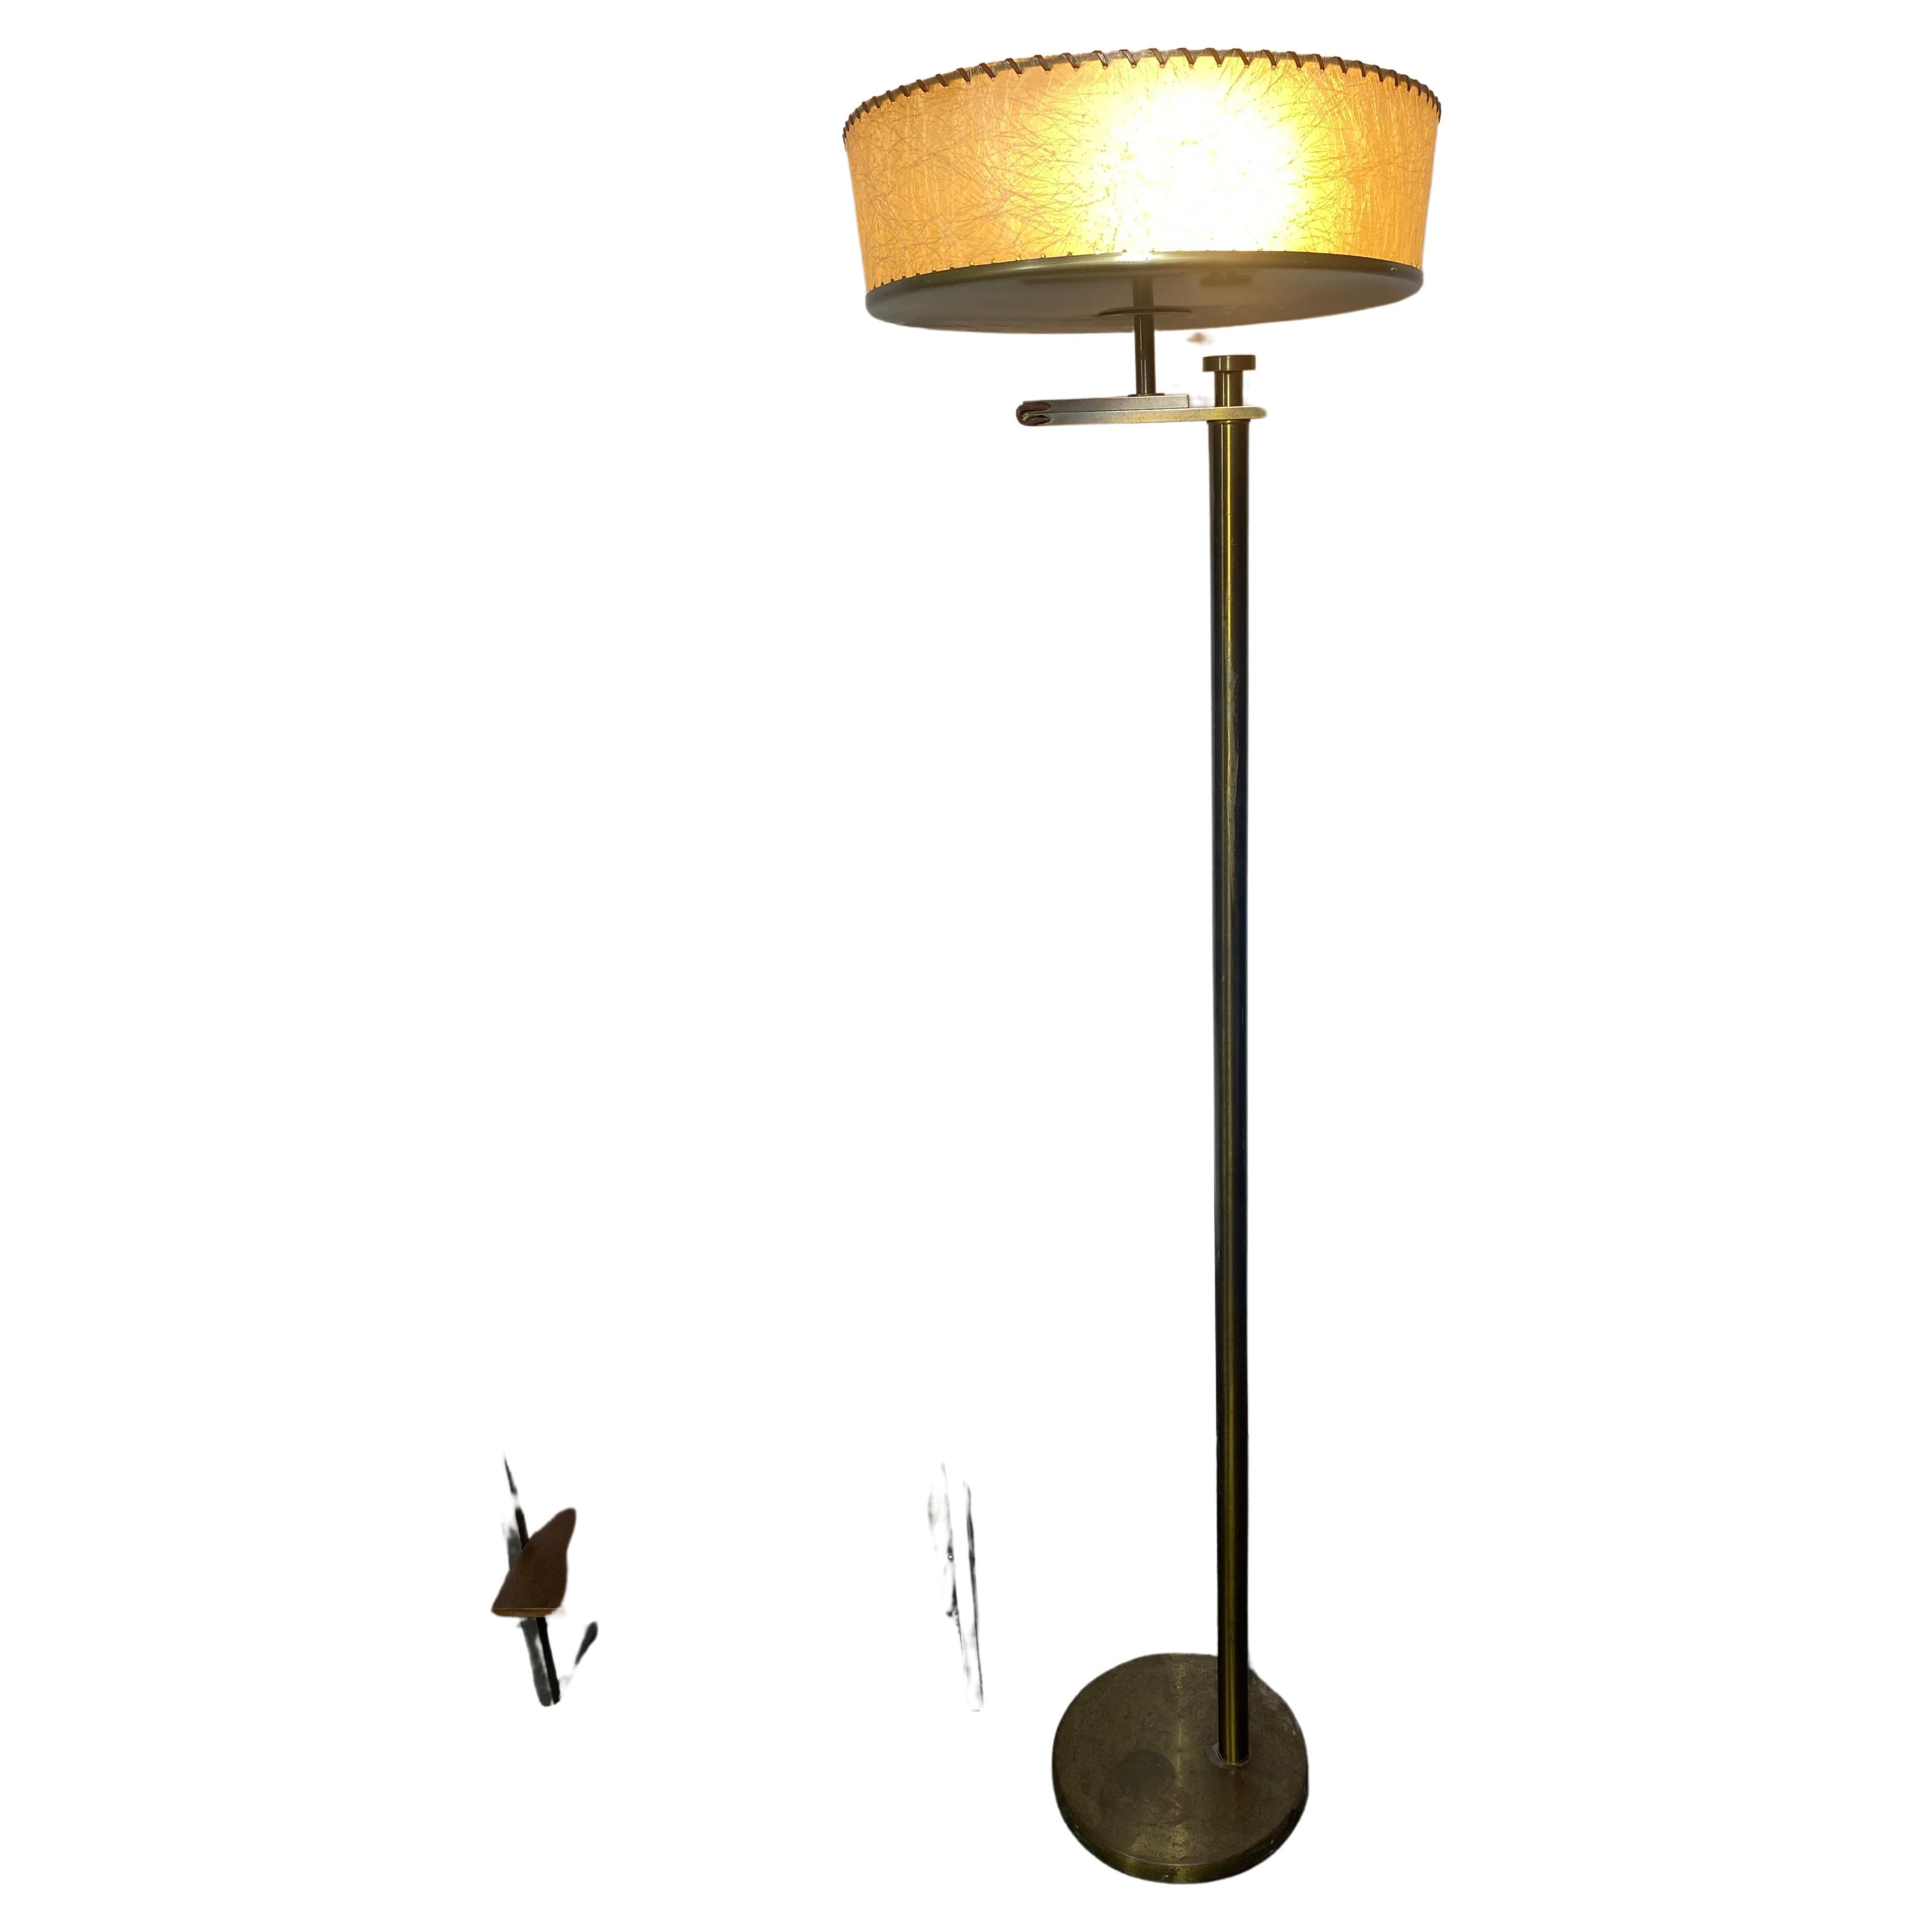 Art Deco/ Modernist Reading or Torchiere Flip Lamp by Kurt Versen For Sale